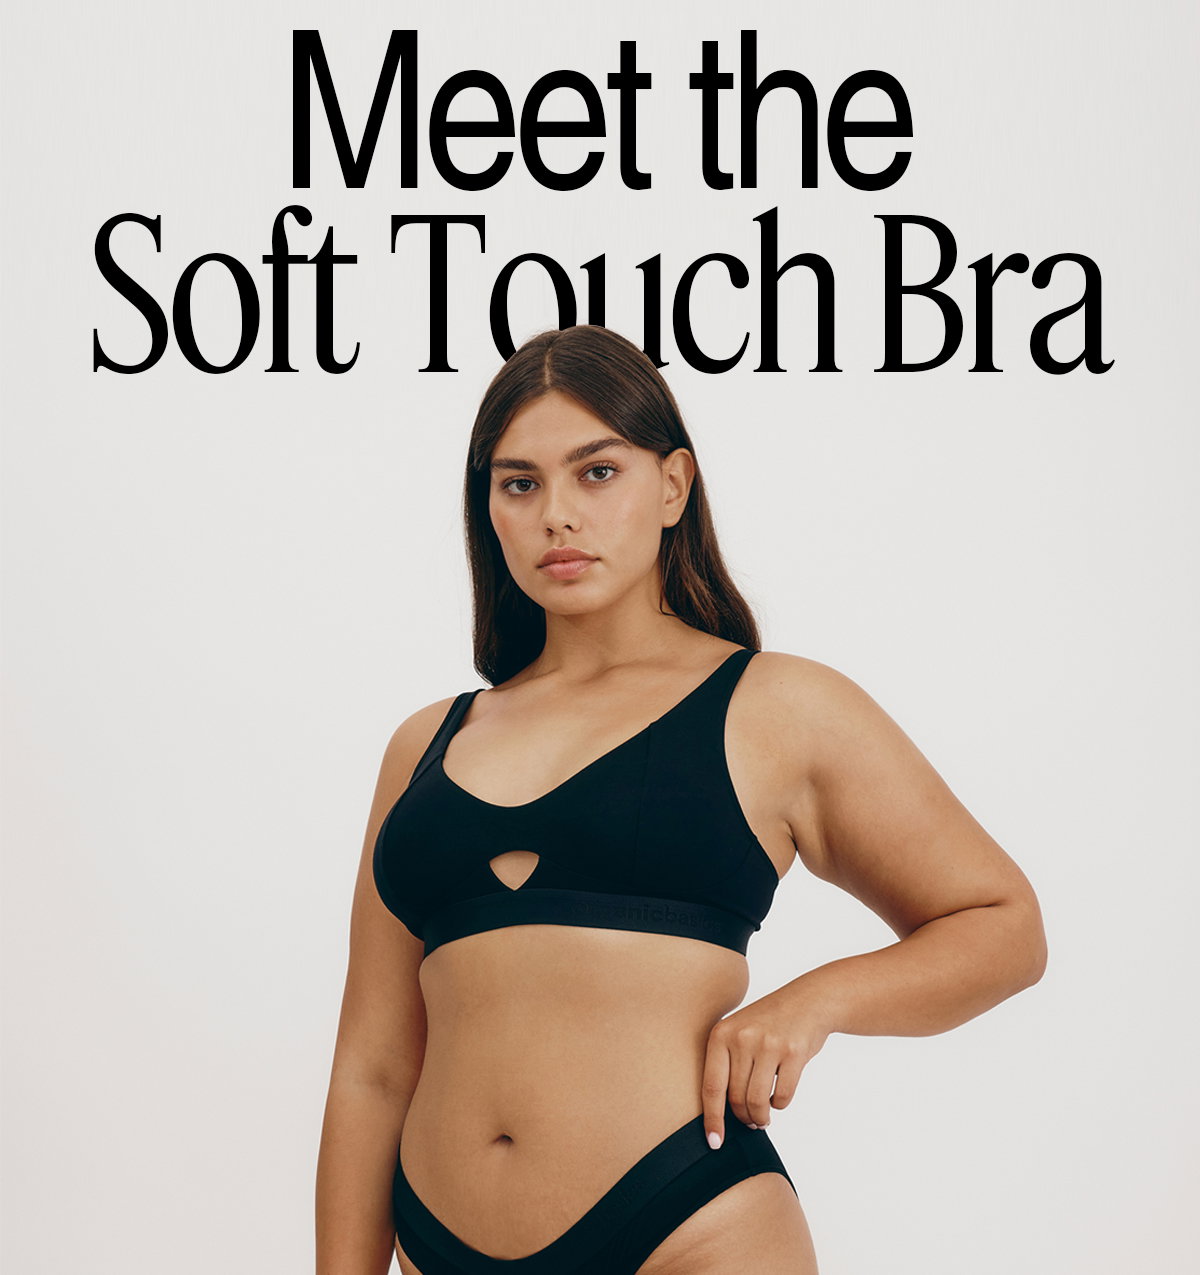 organicbasics: Meet the Soft Touch Bra